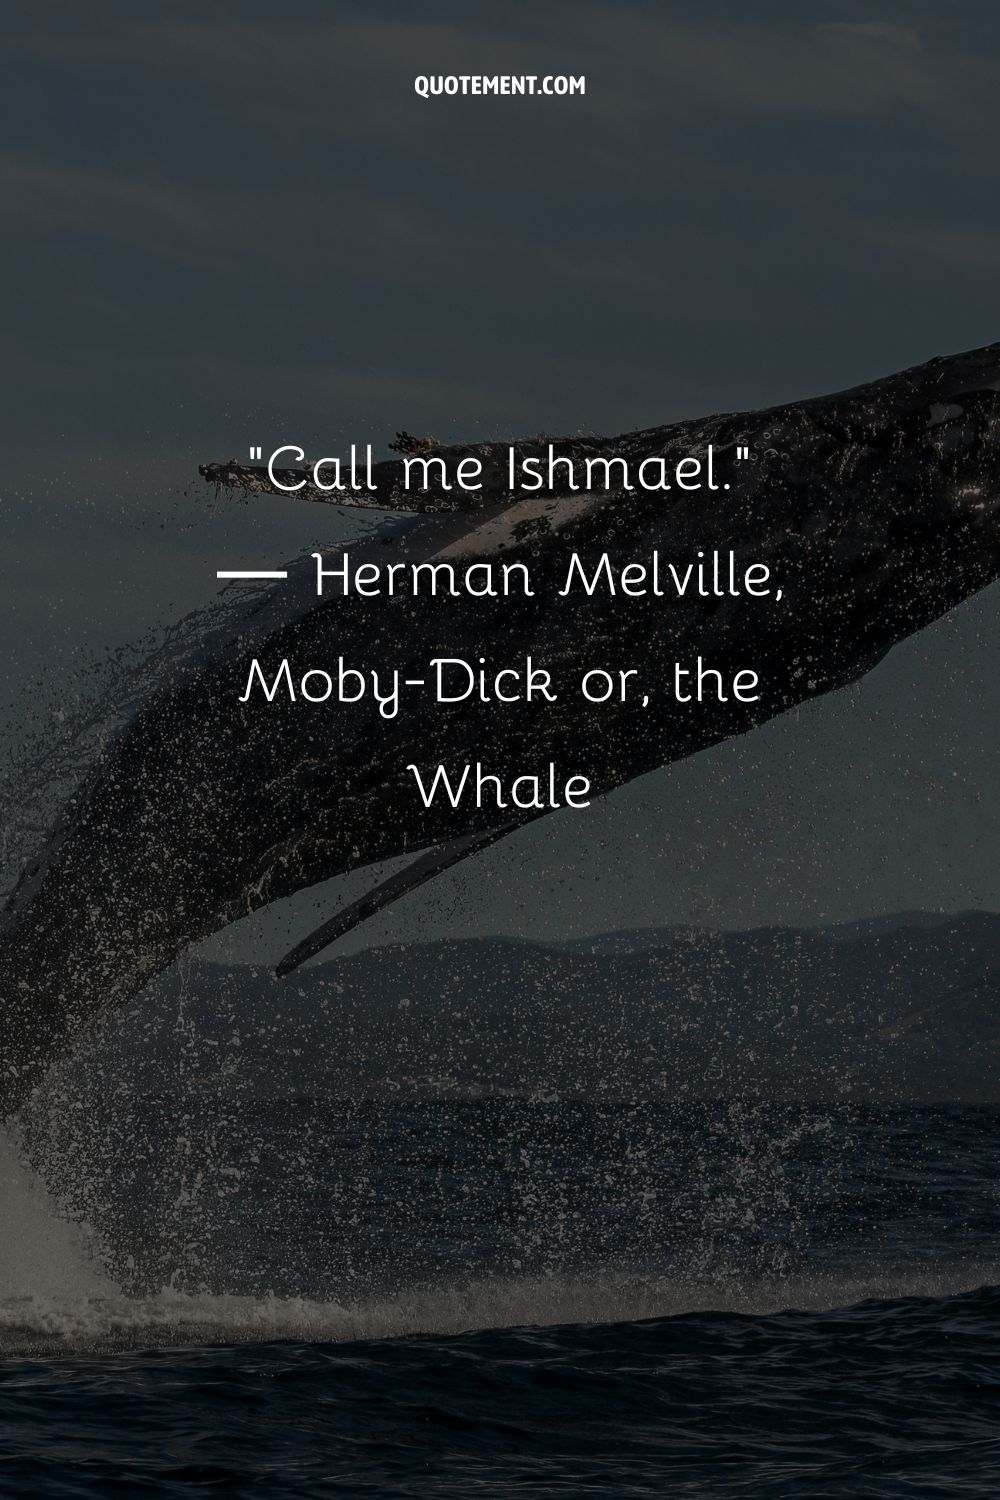 Call me Ishmael.